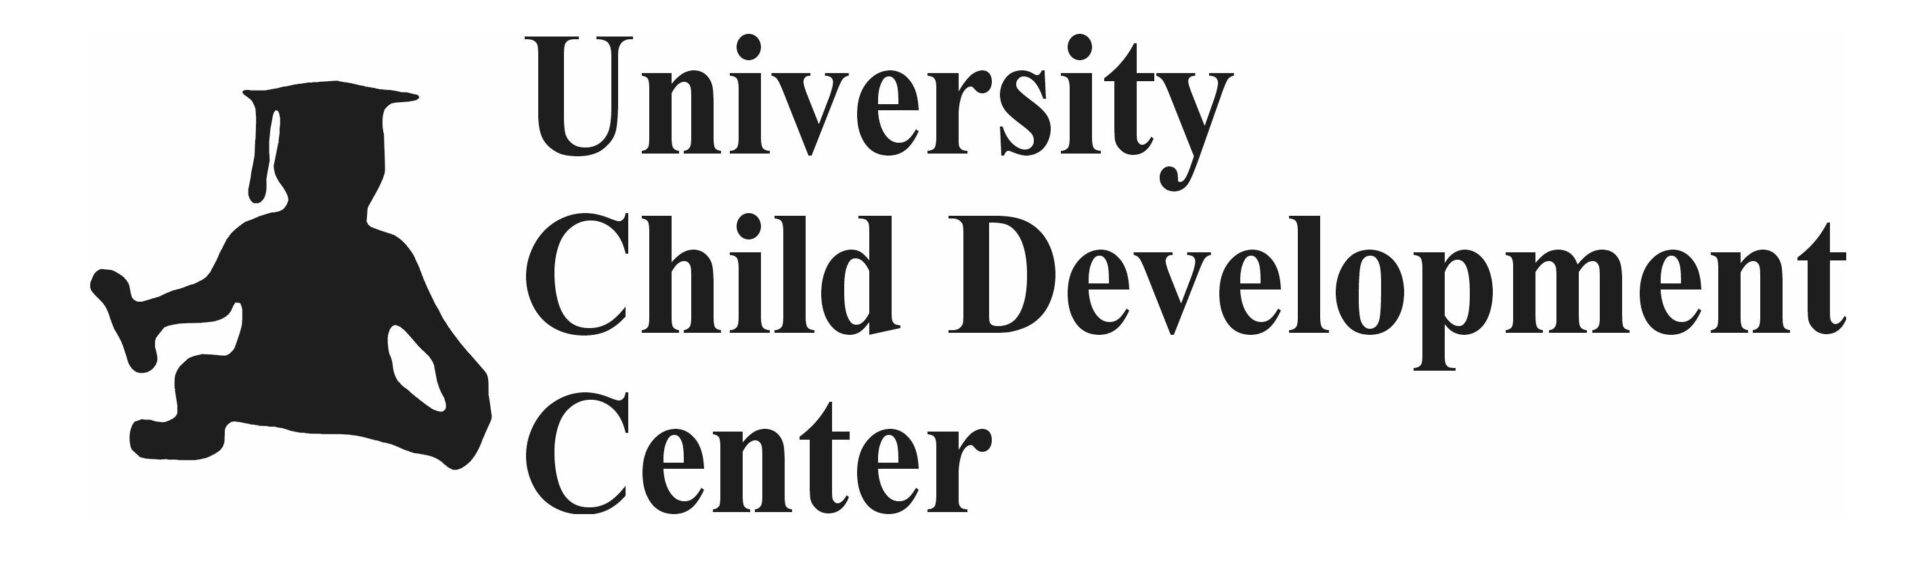 University Child Development